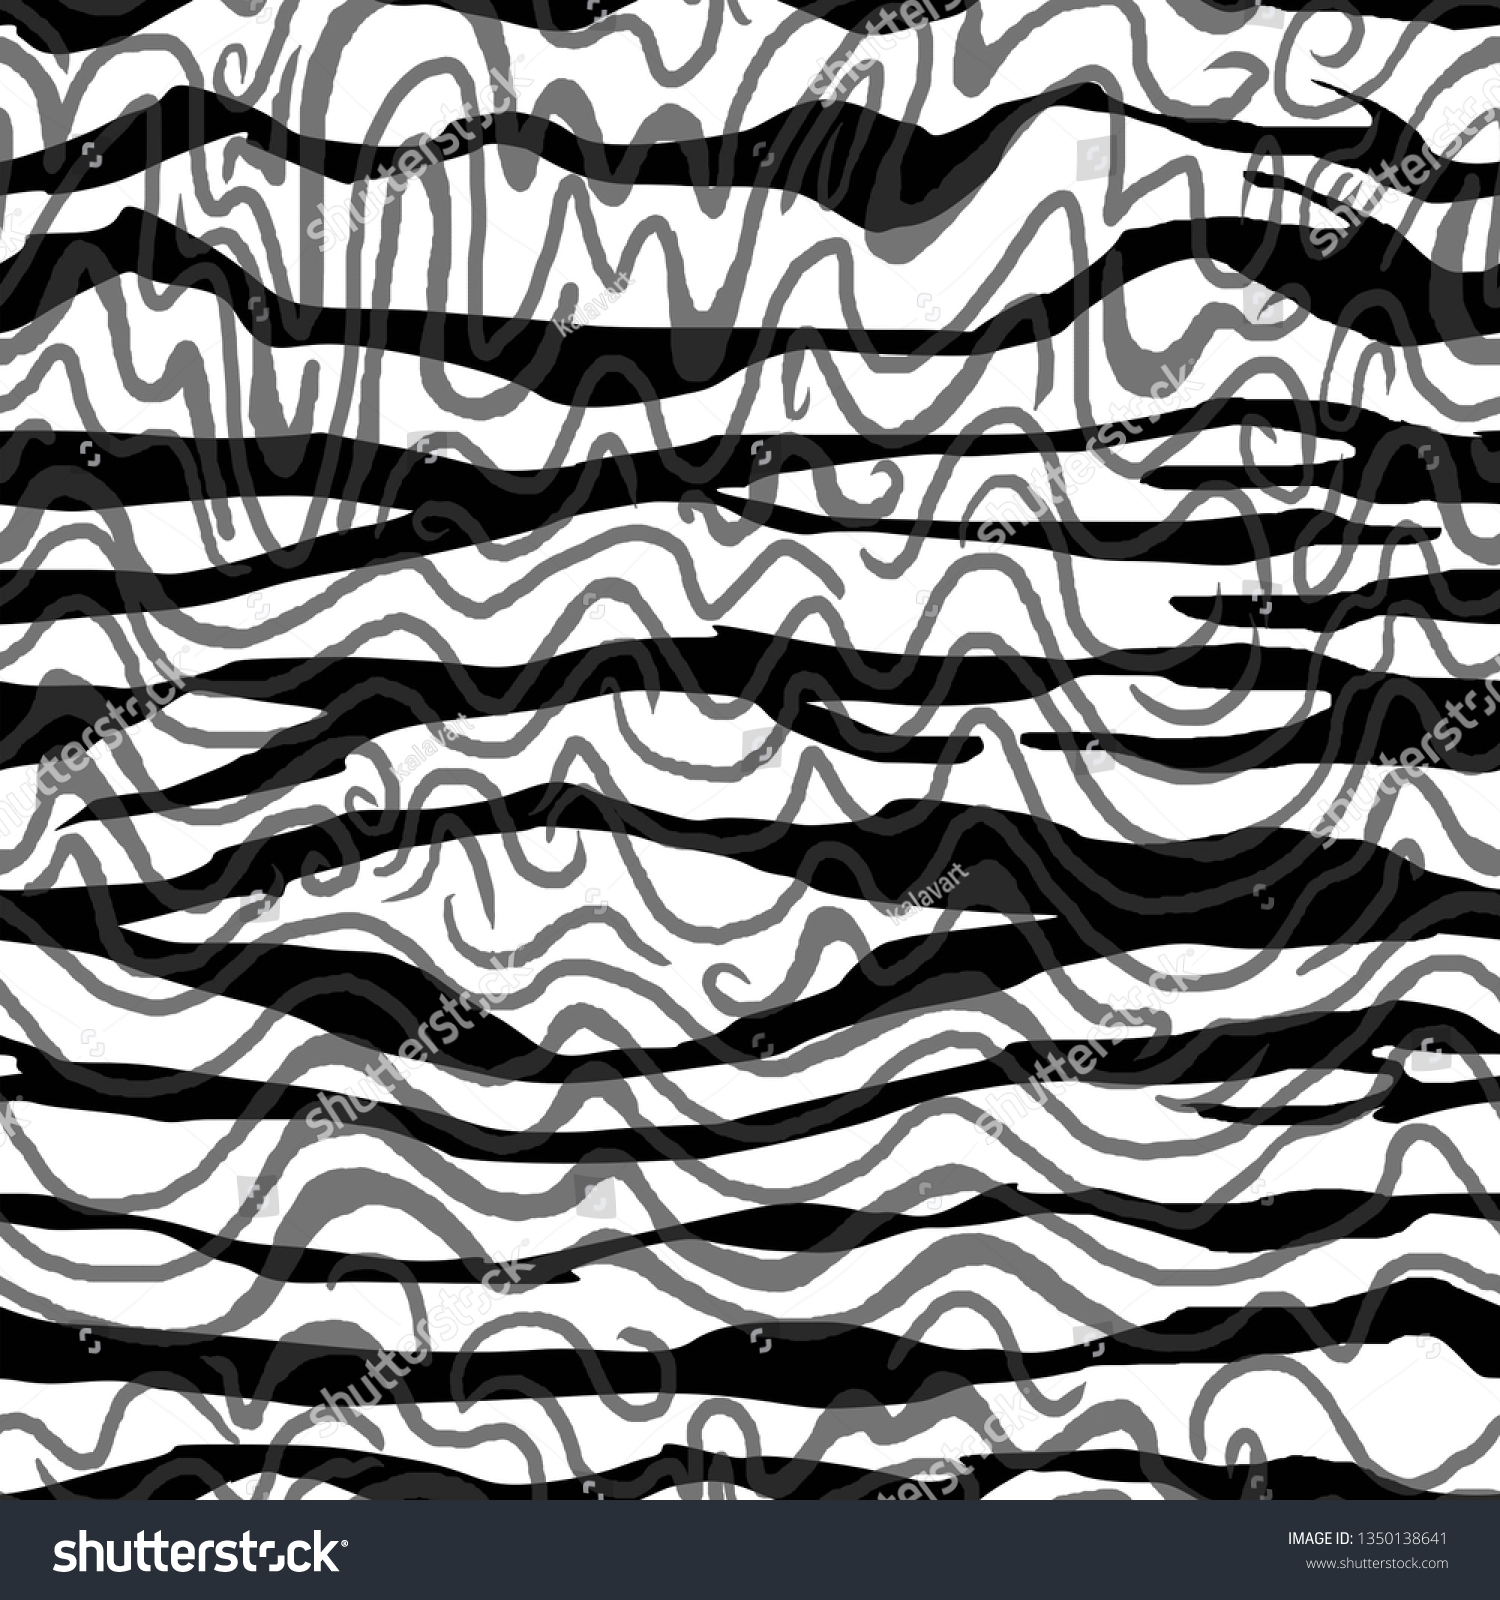 Zebra Skin Texture Seamless Hand Drawn Stock Illustration 1350138641 ...